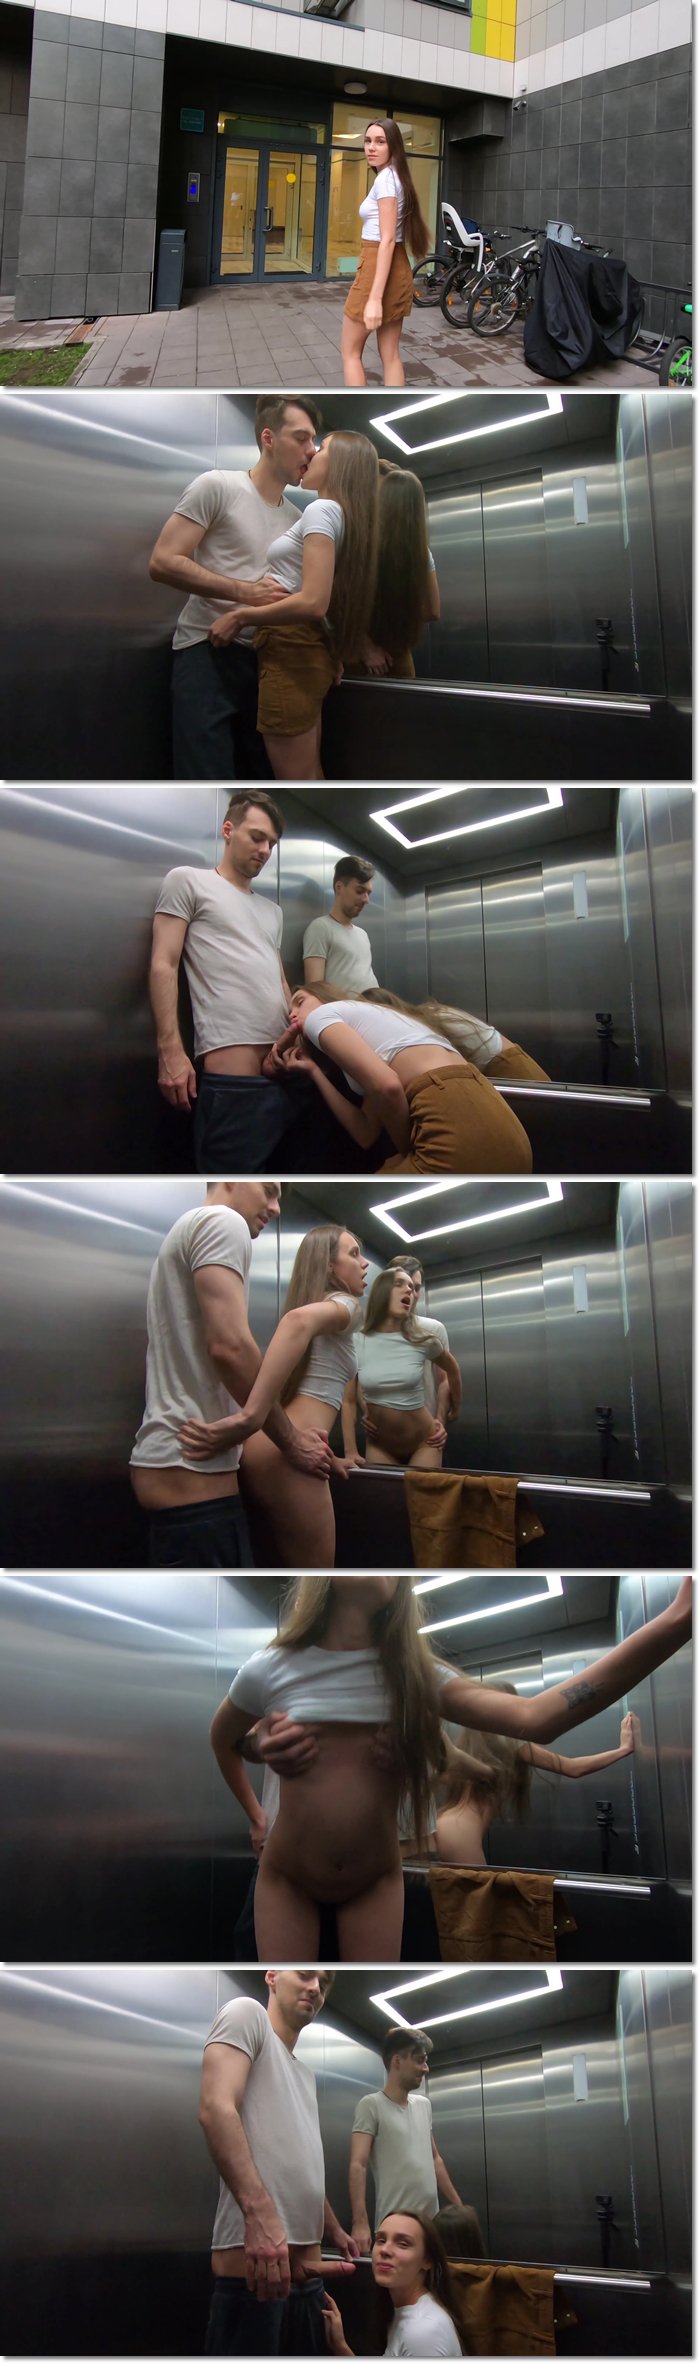 Public Sex Sexy - Forumophilia - PORN FORUM : Risky Public Sex In Elevator With Cute Sexy  Teen Girlfriend